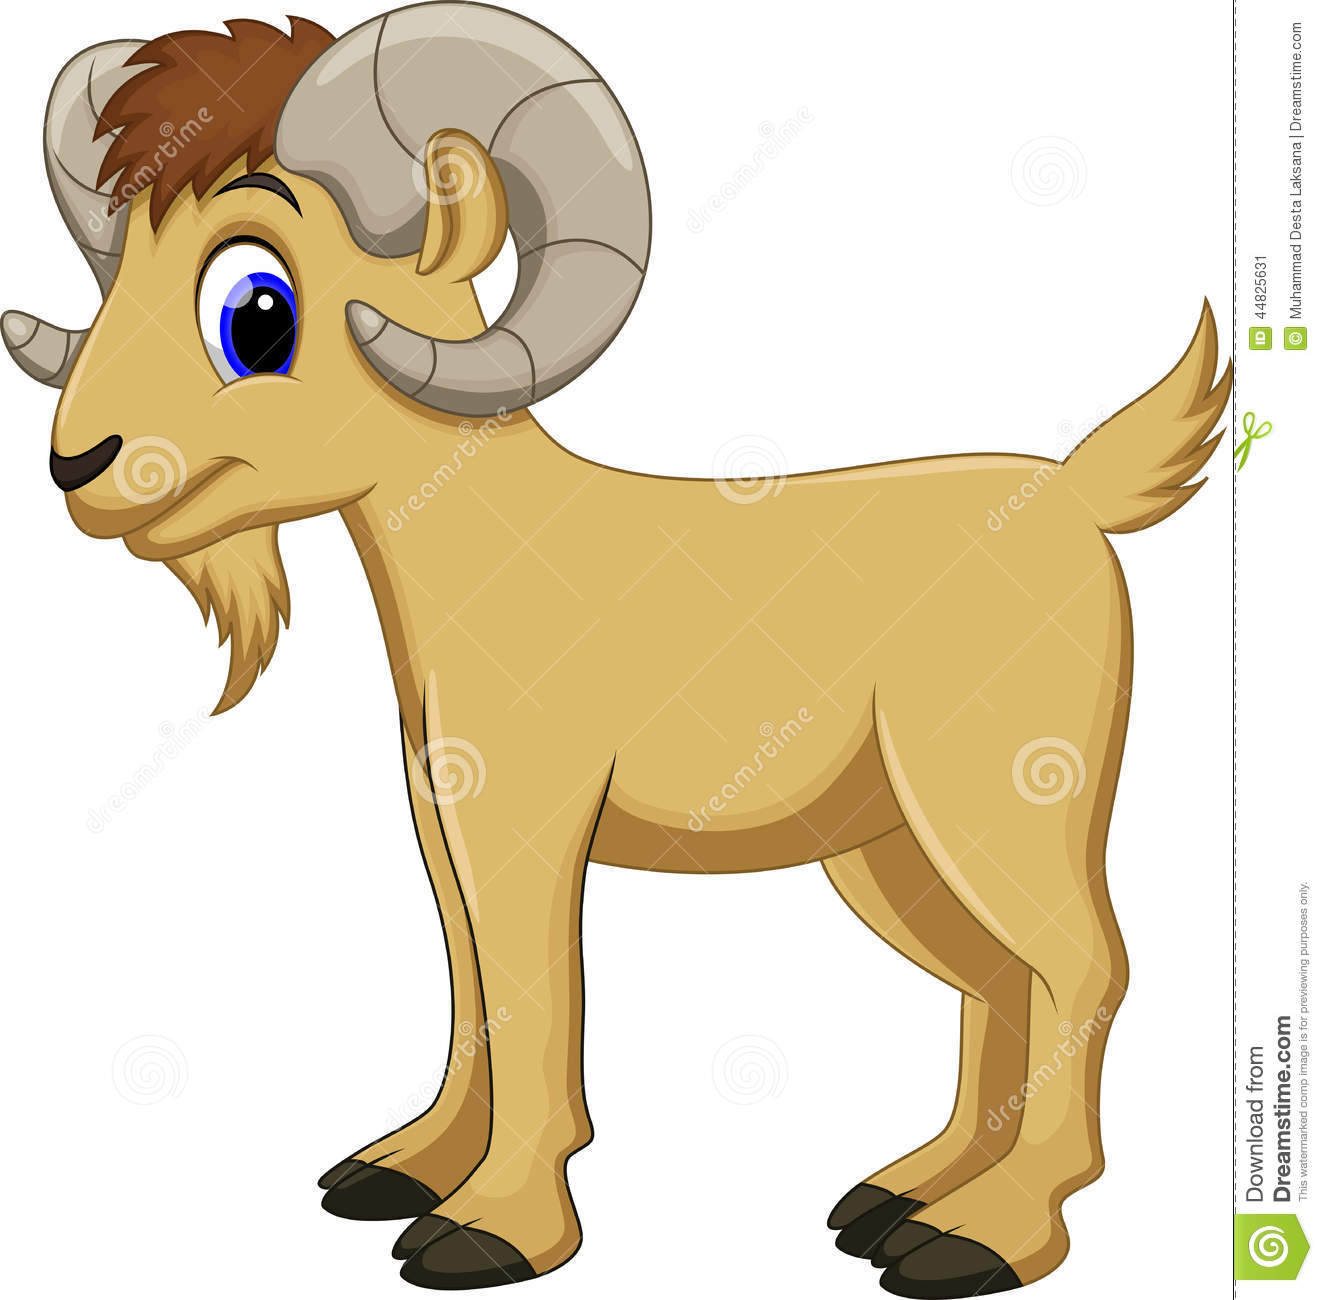 Cute Goat Cartoon Stock Illustration   Image  44825631